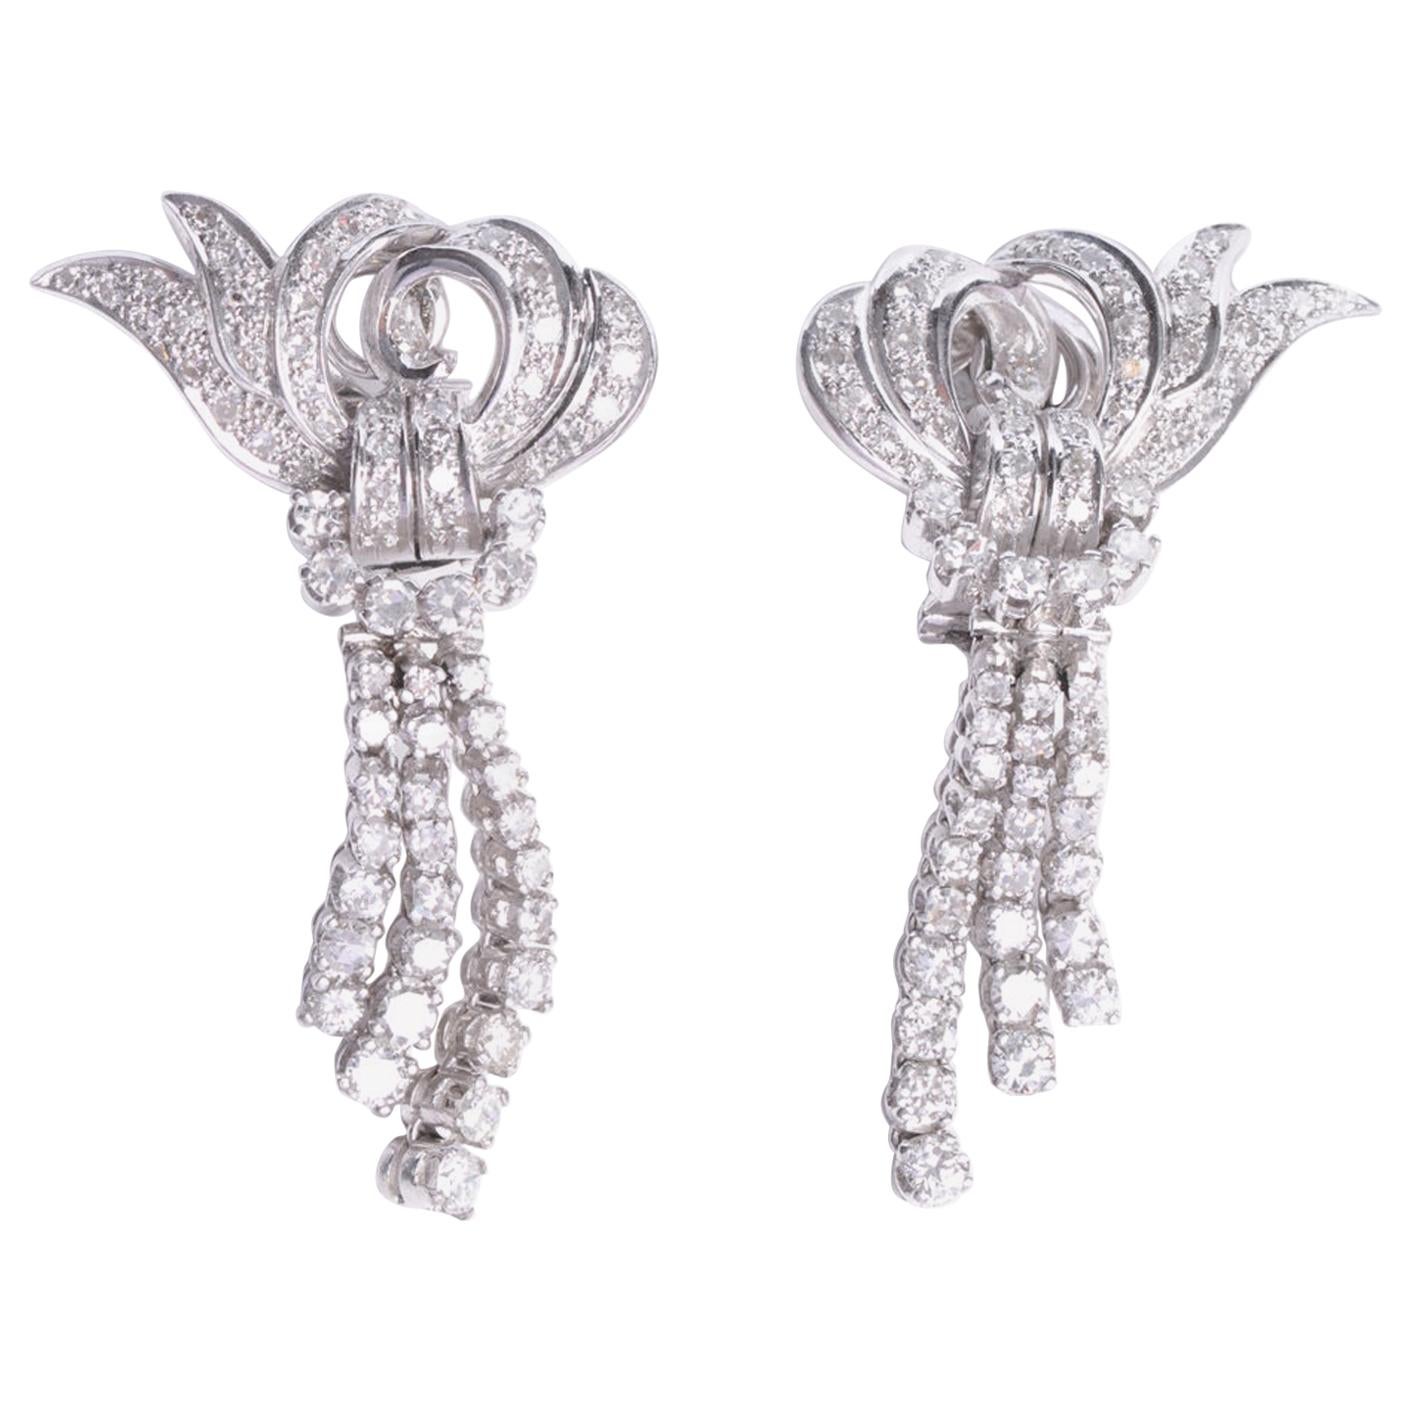 Platinum and Diamond Earrings